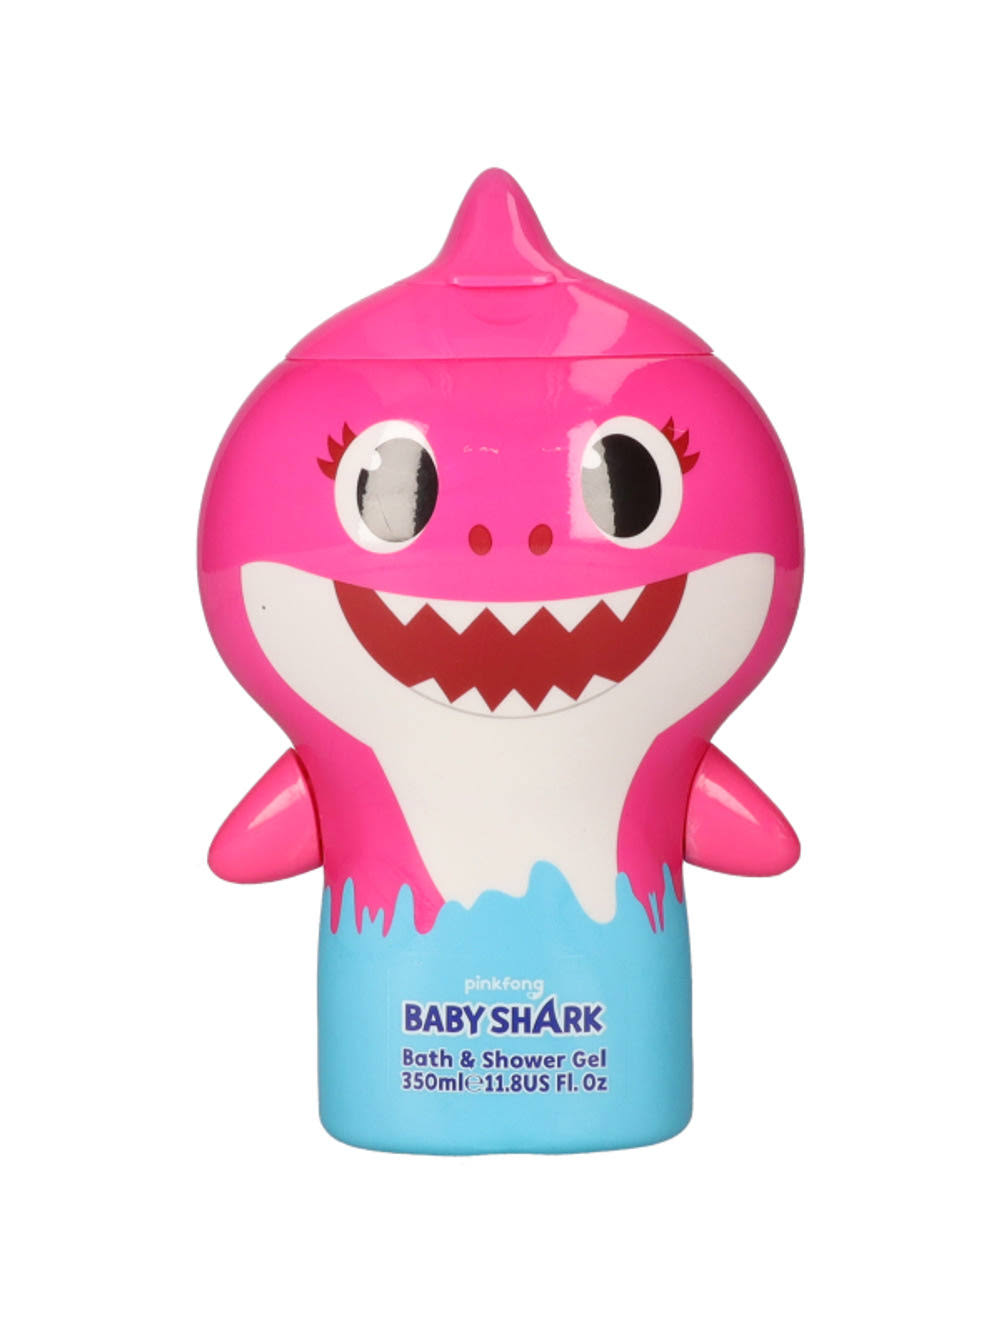 2 x Baby Shark Mummy Bath & Shower Gel 350ml For Sale Online | eBay